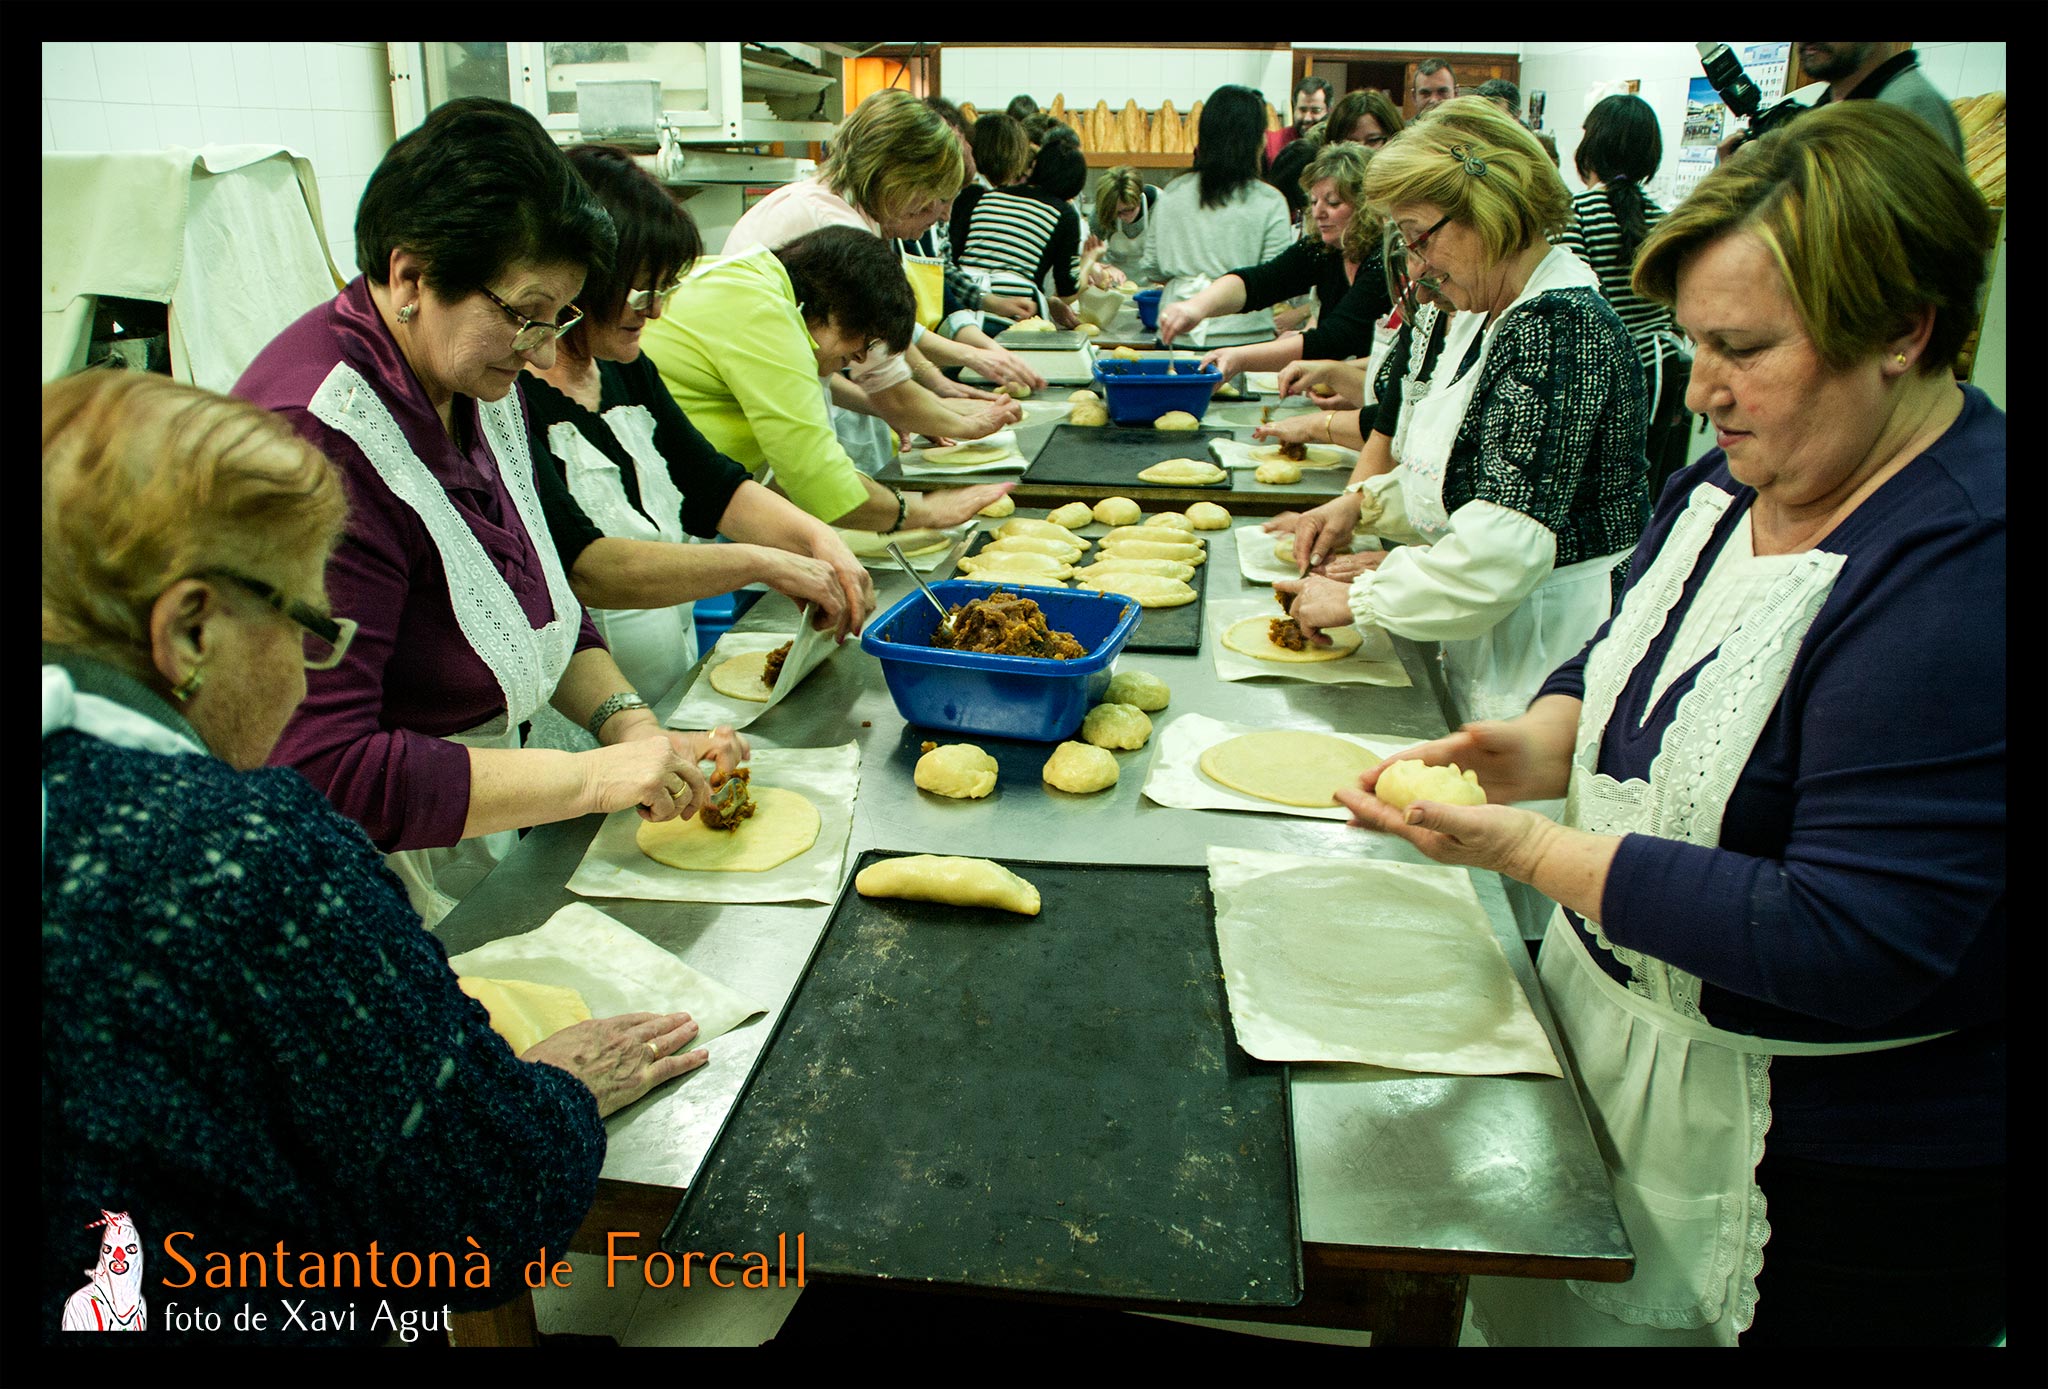 Forn de Paco - Les dones fan les Pastes als forns del Poble.